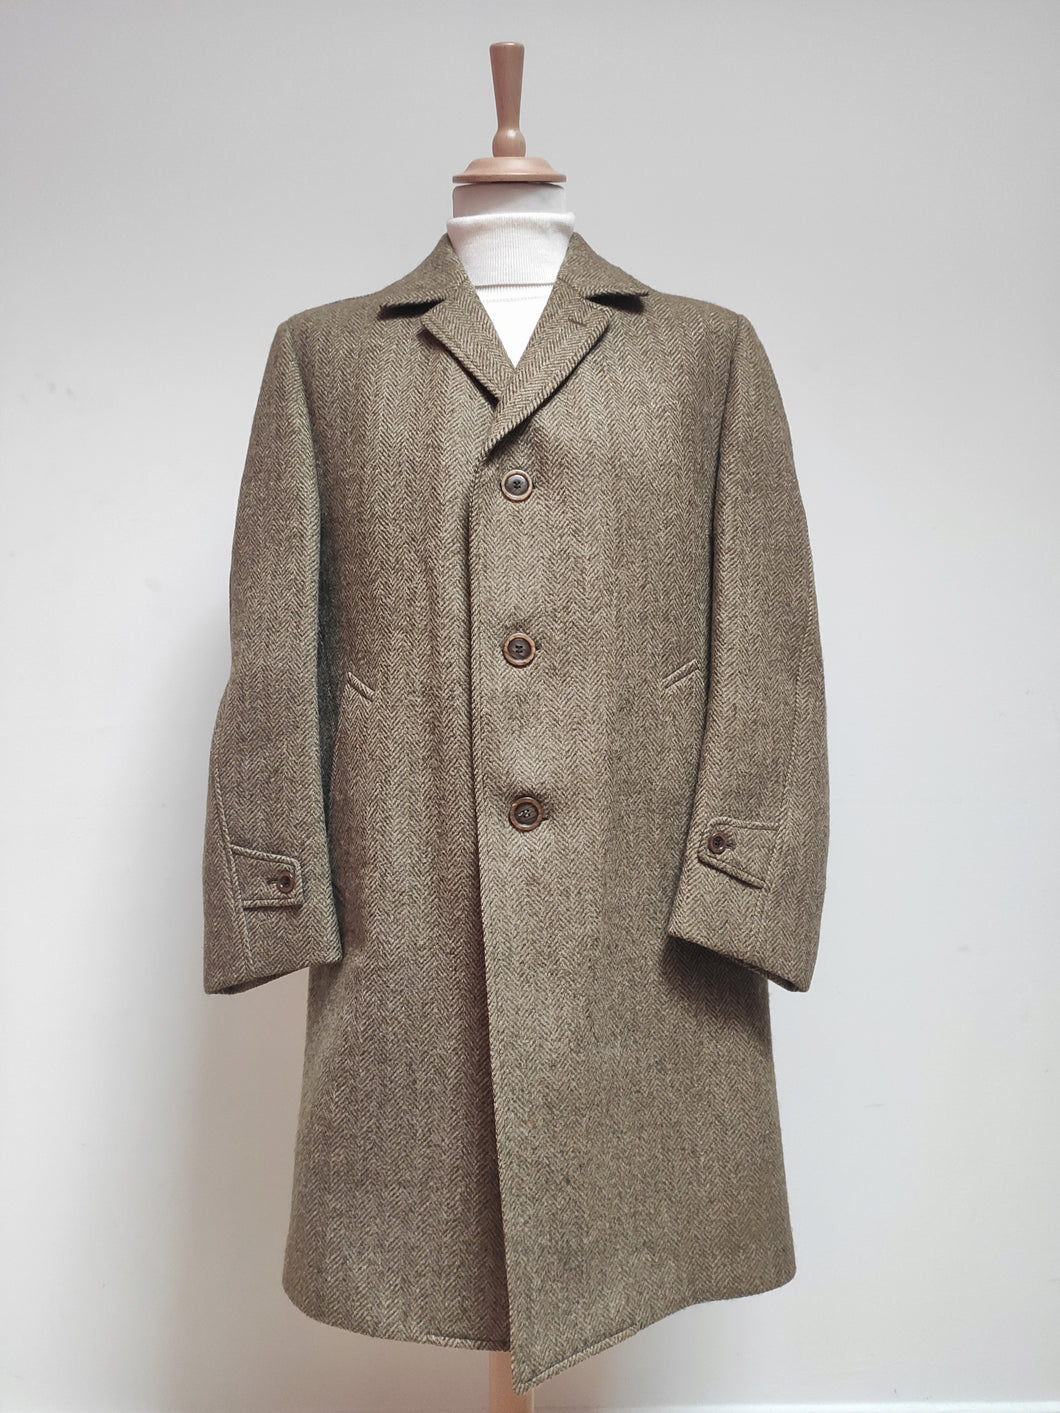 Everlasting Cheviot X Everwell manteau à chevrons en pure laine peignée Made in France 50